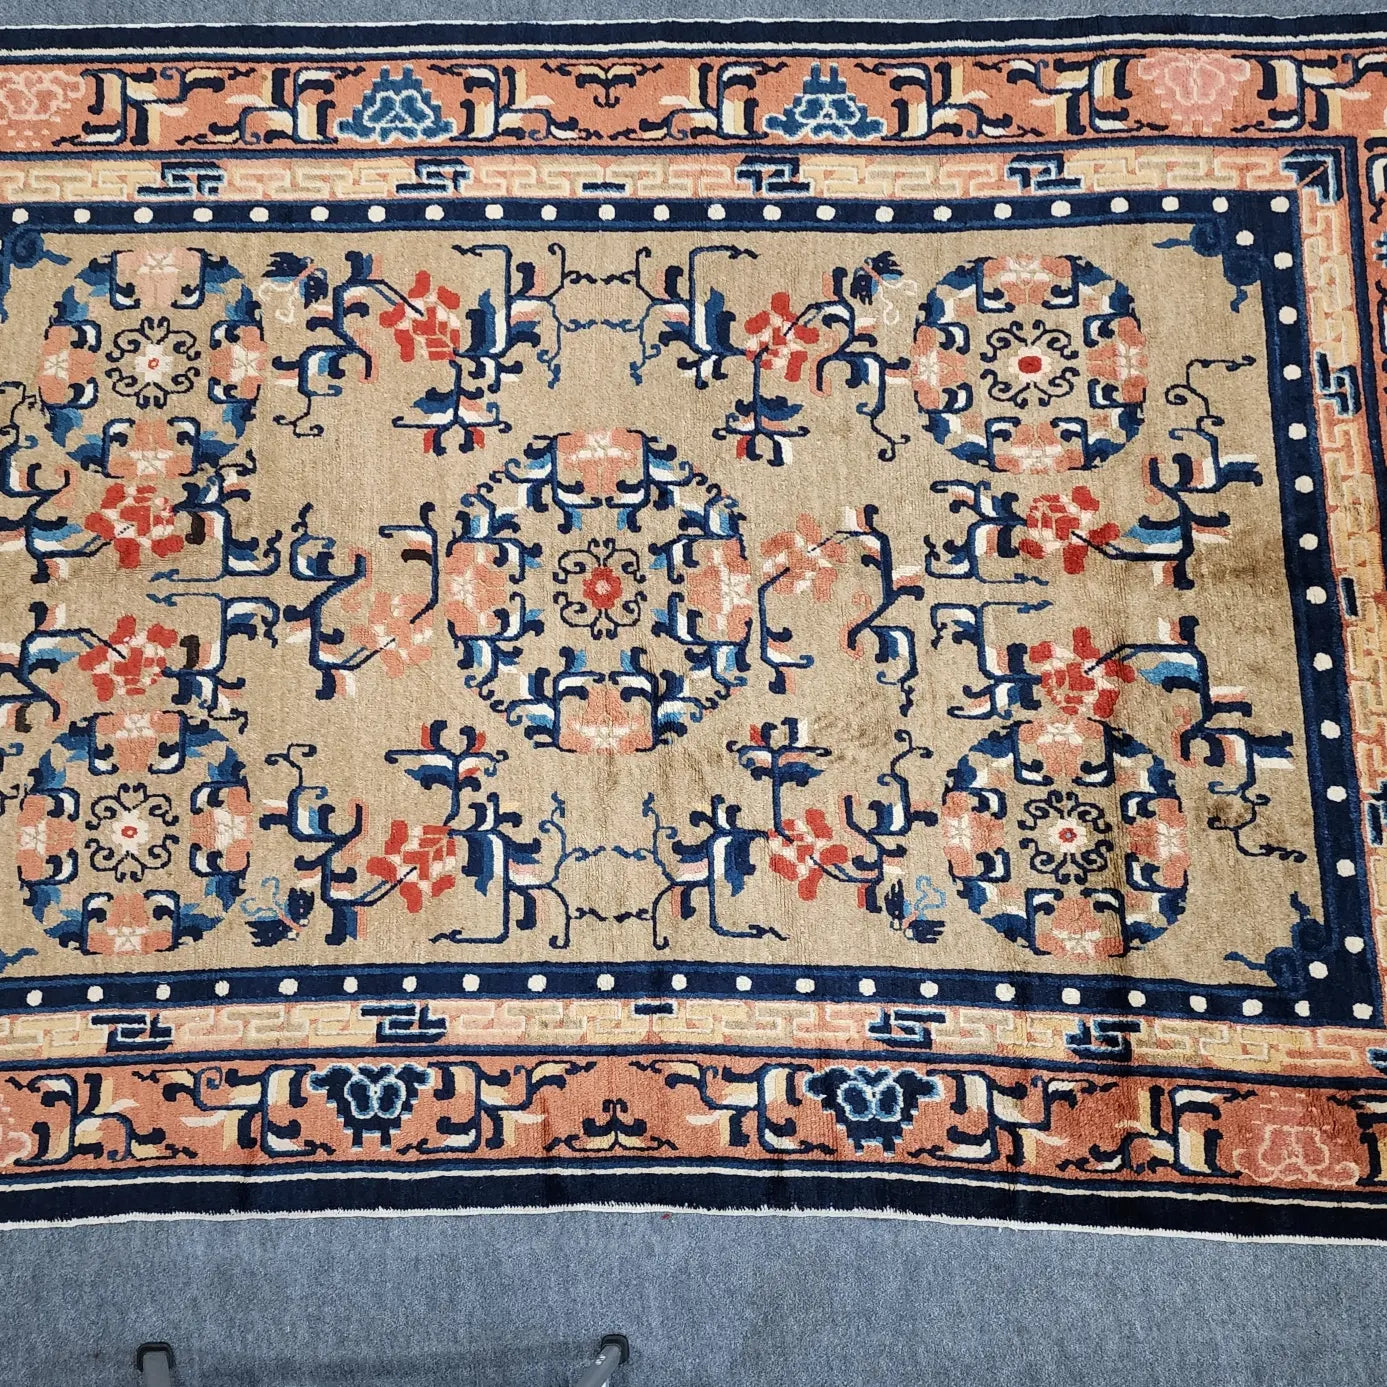 19th century nigh sai chinese rug